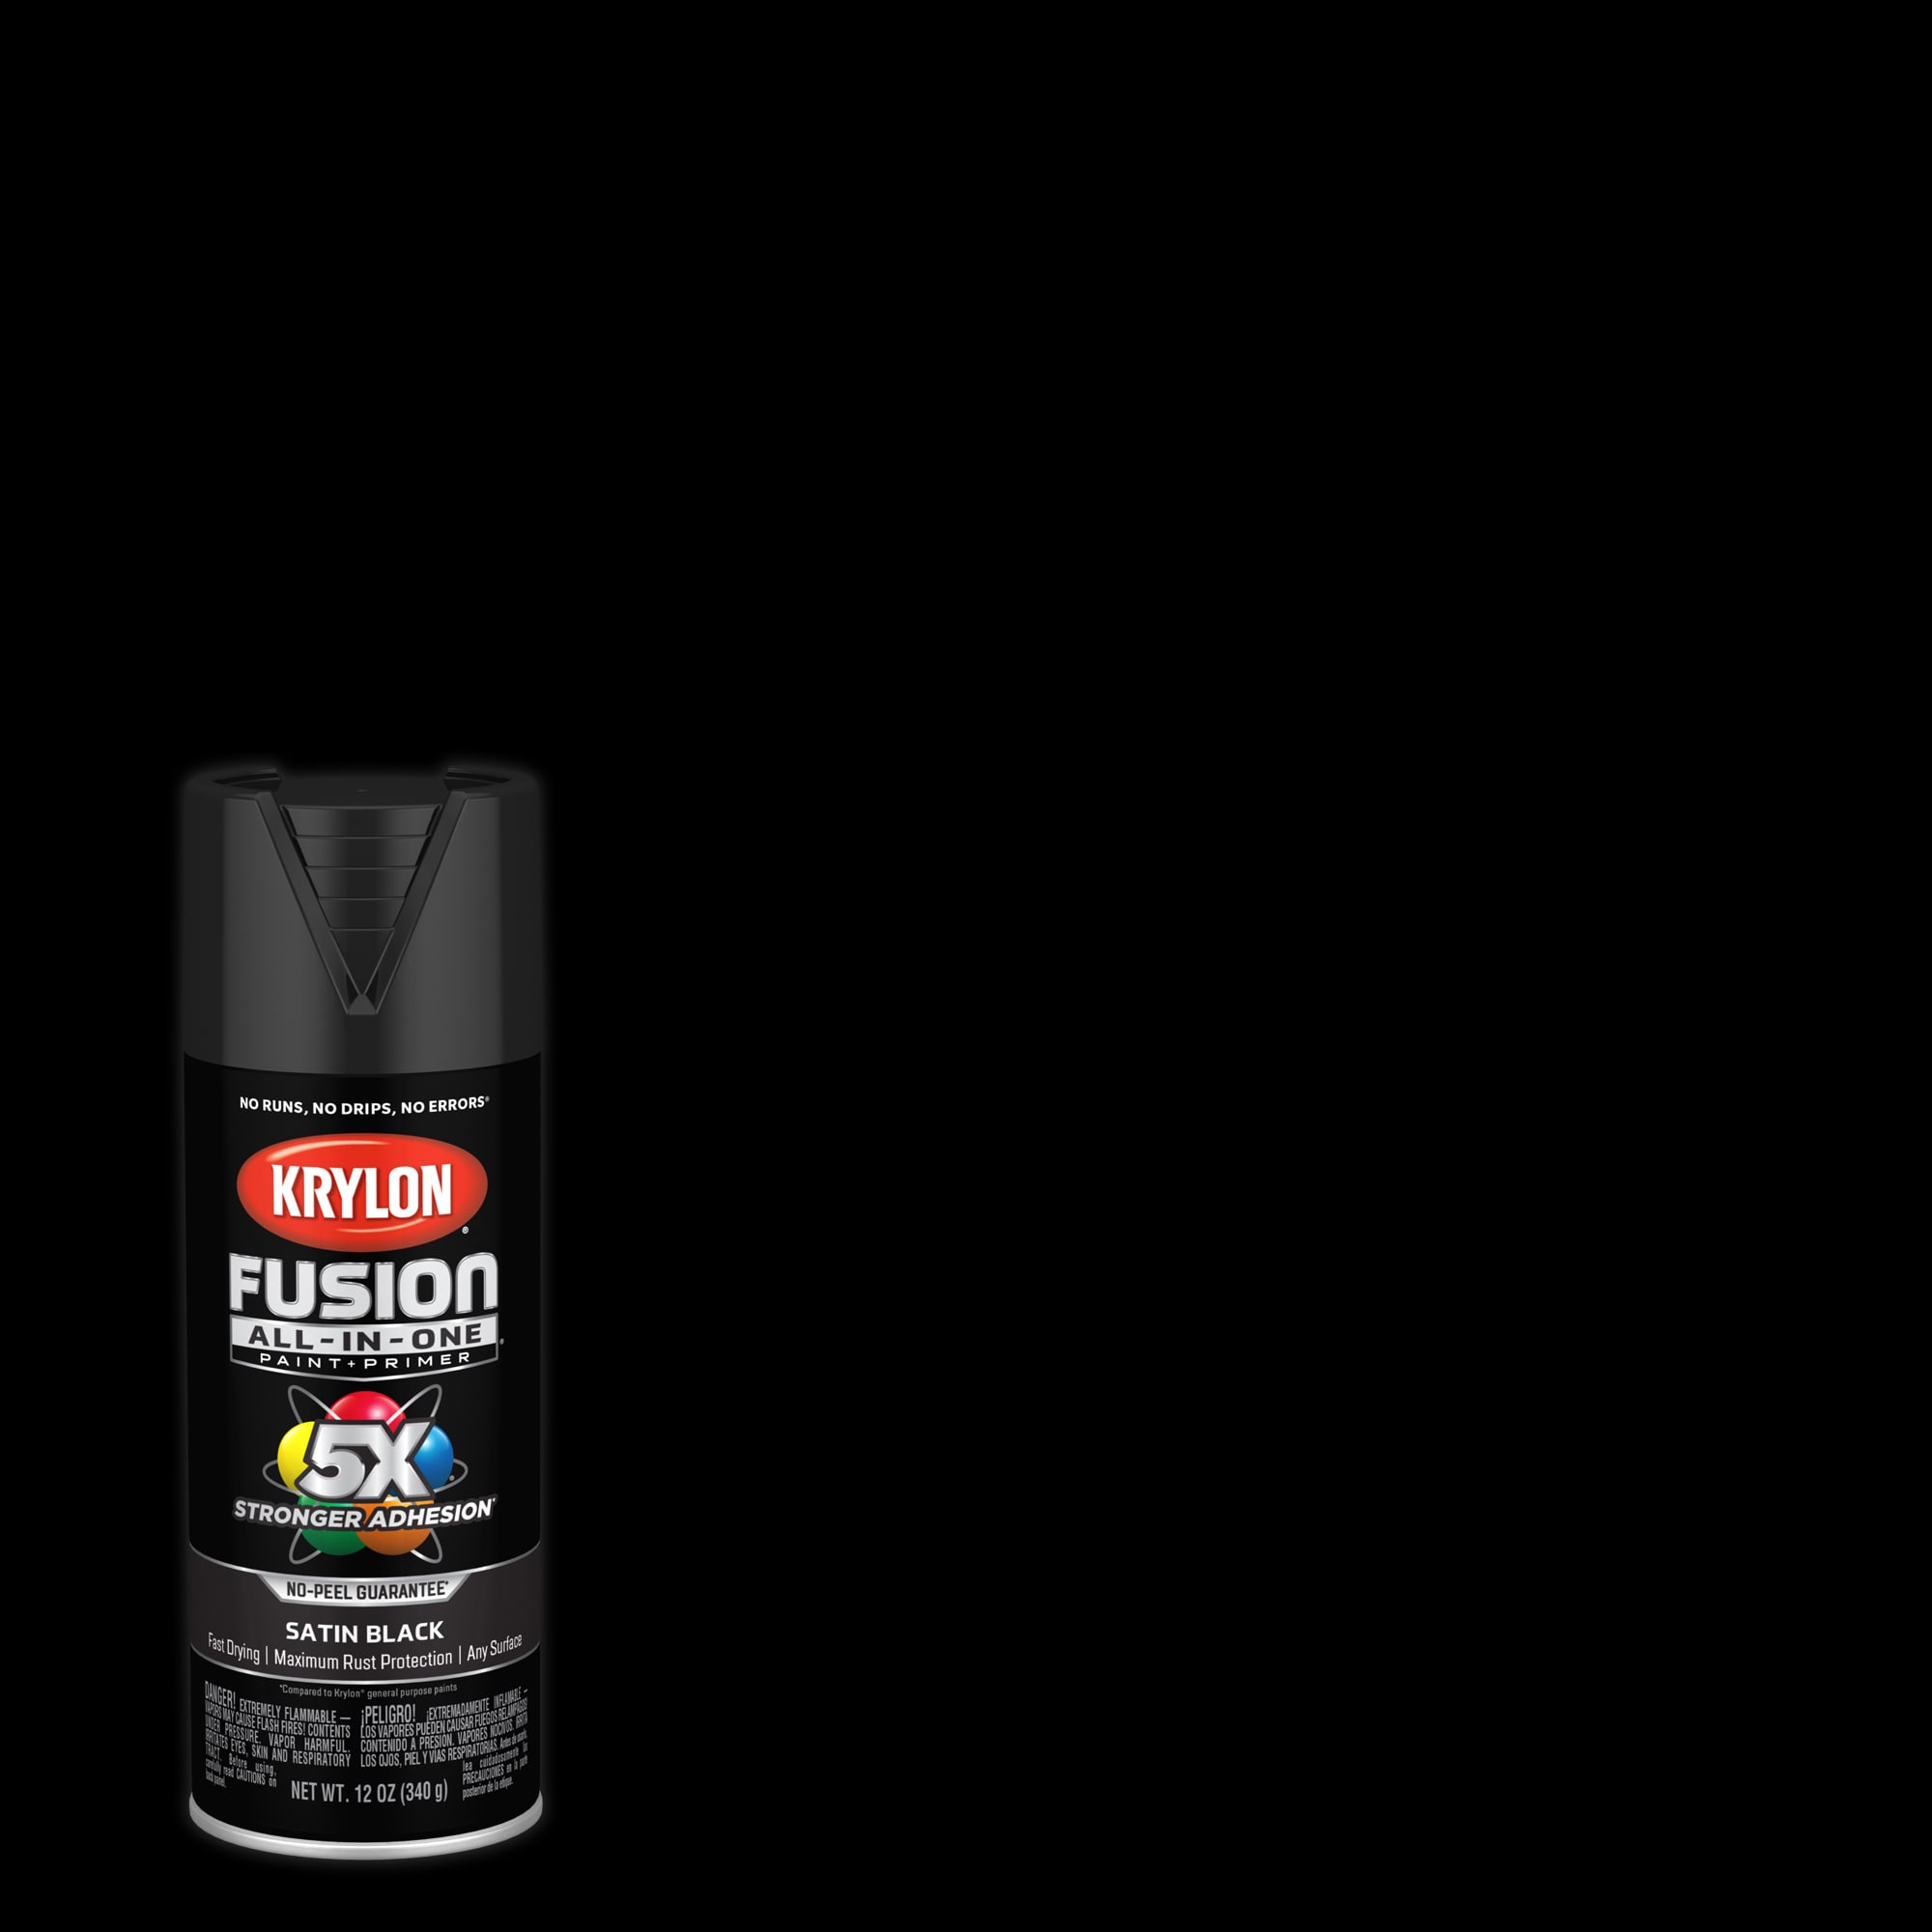 Valspar Satin Black Spray Paint 410.0085049.076 Unit: EACH - Bed Bath &  Beyond - 17566902